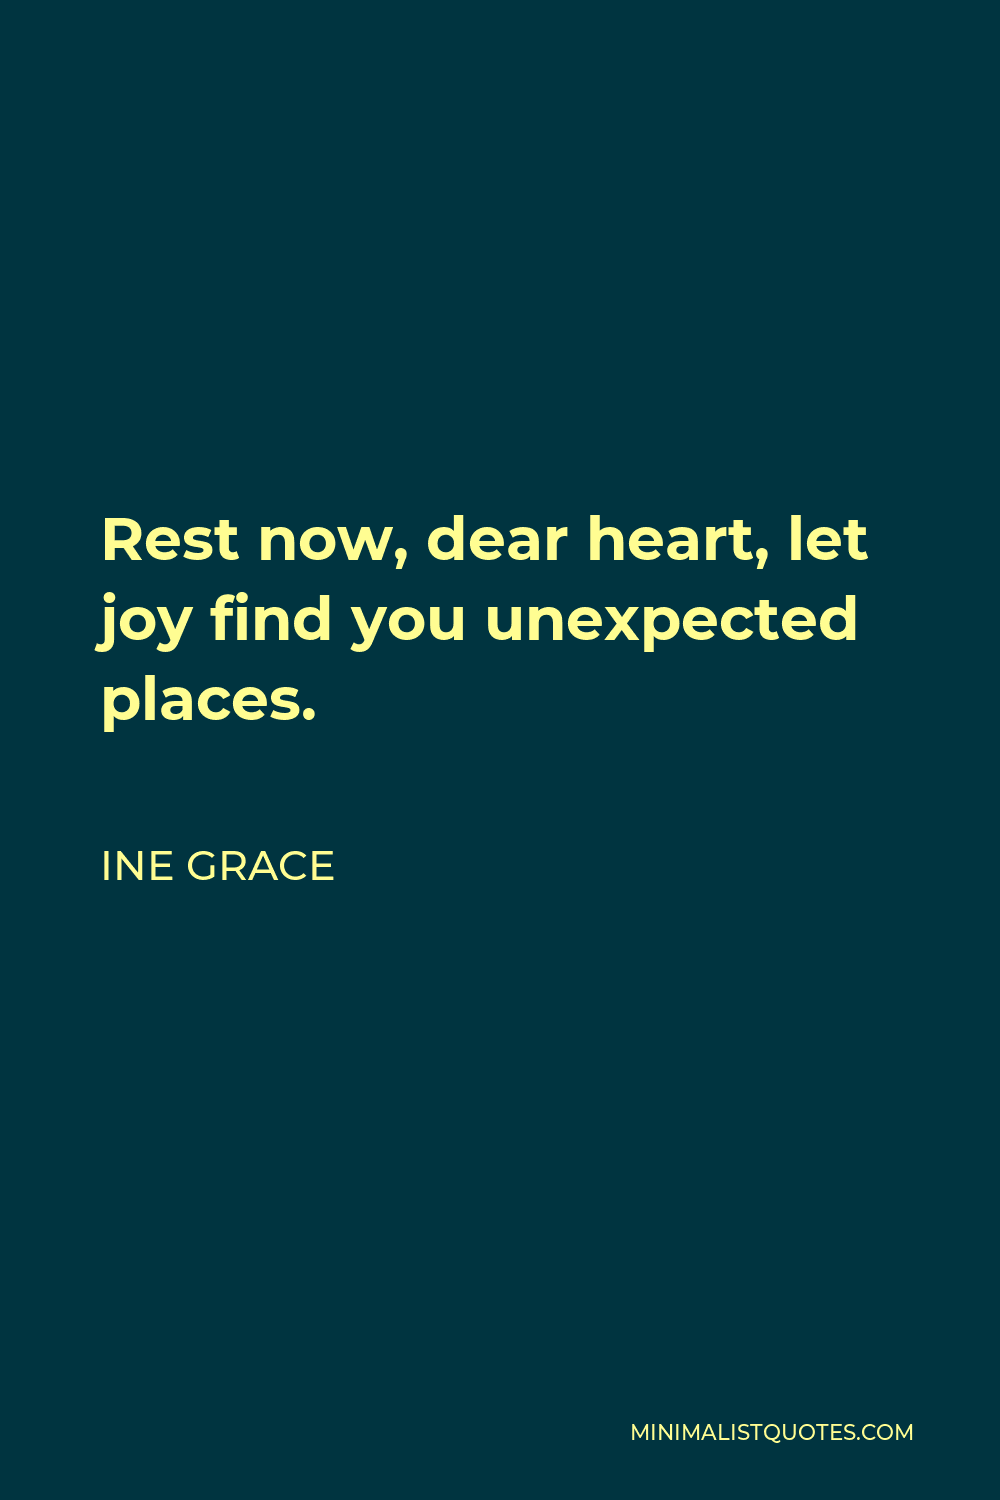 Ine Grace Quote - Rest now, dear heart, let joy find you unexpected places.